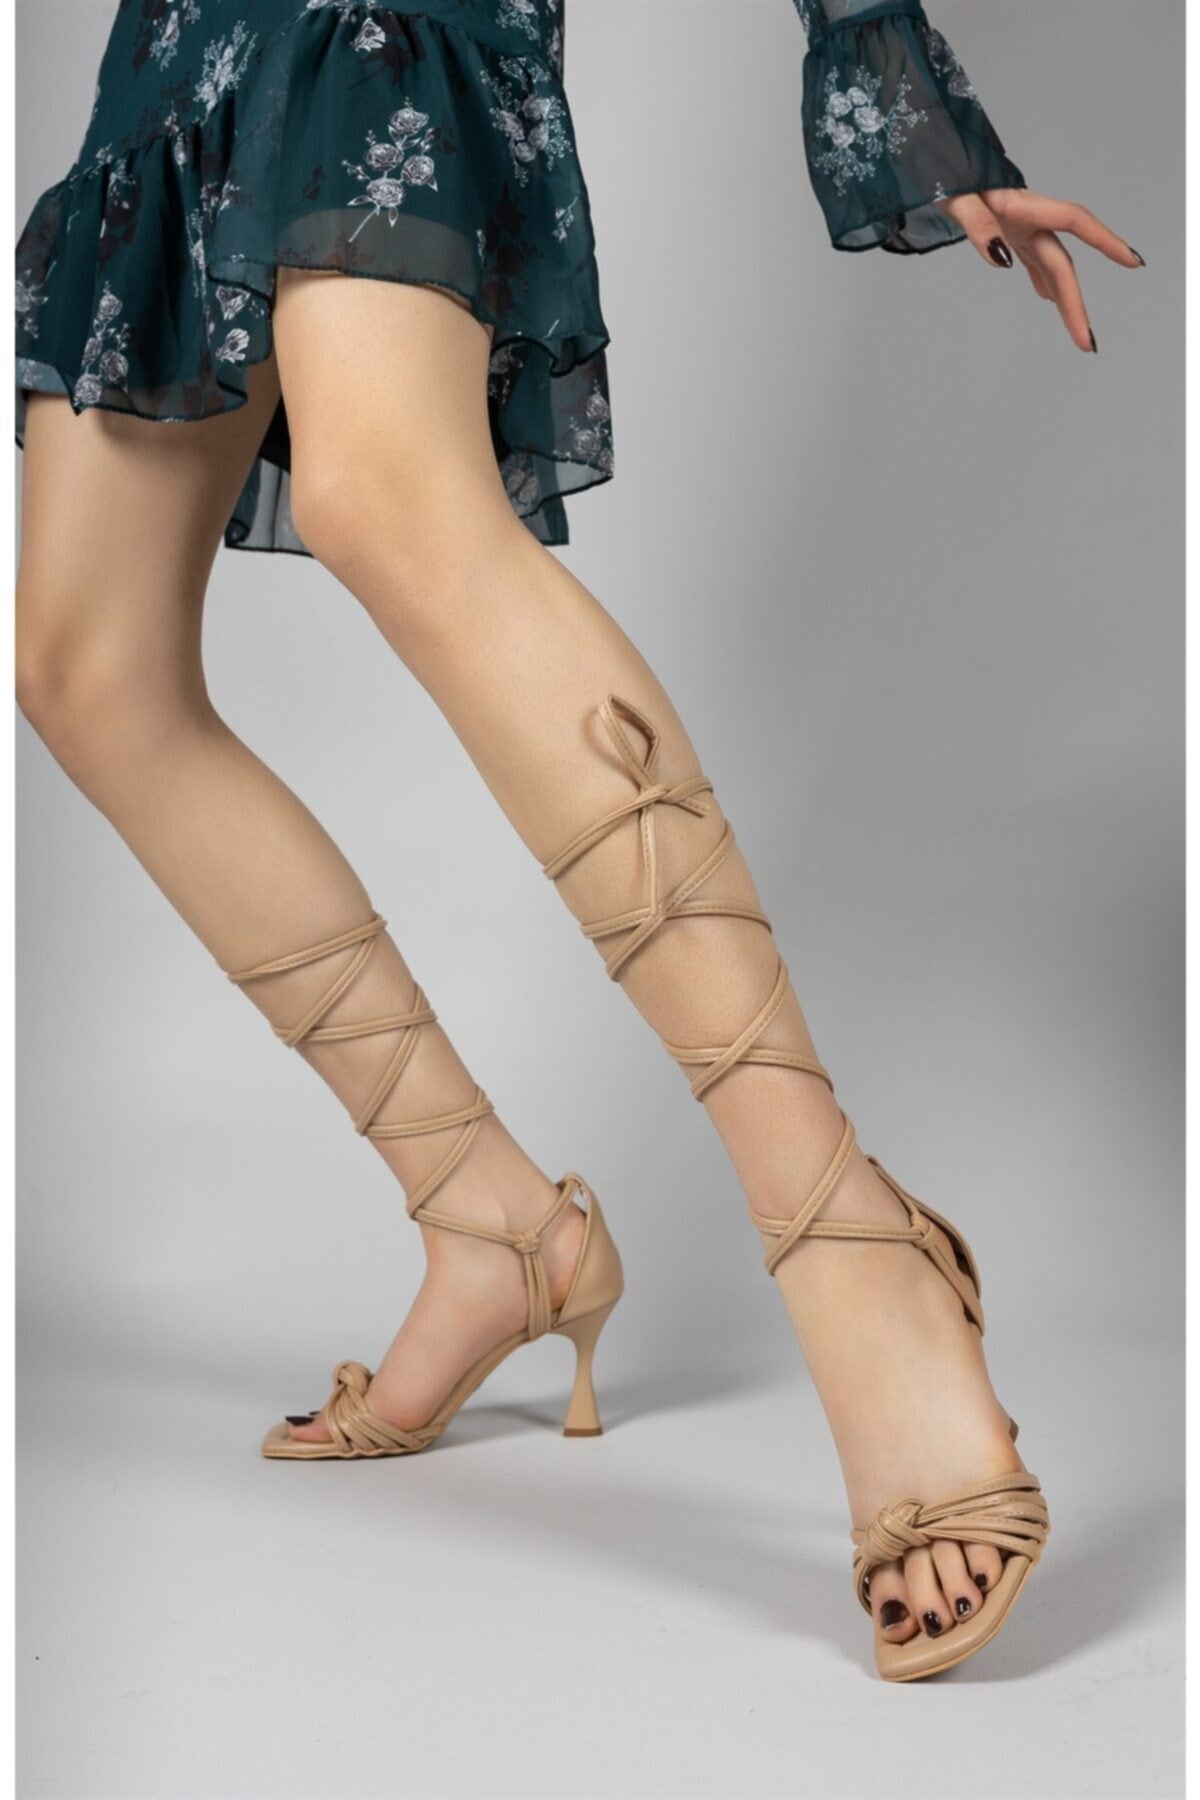 Nude Skin Women Heels Shoes 0012364